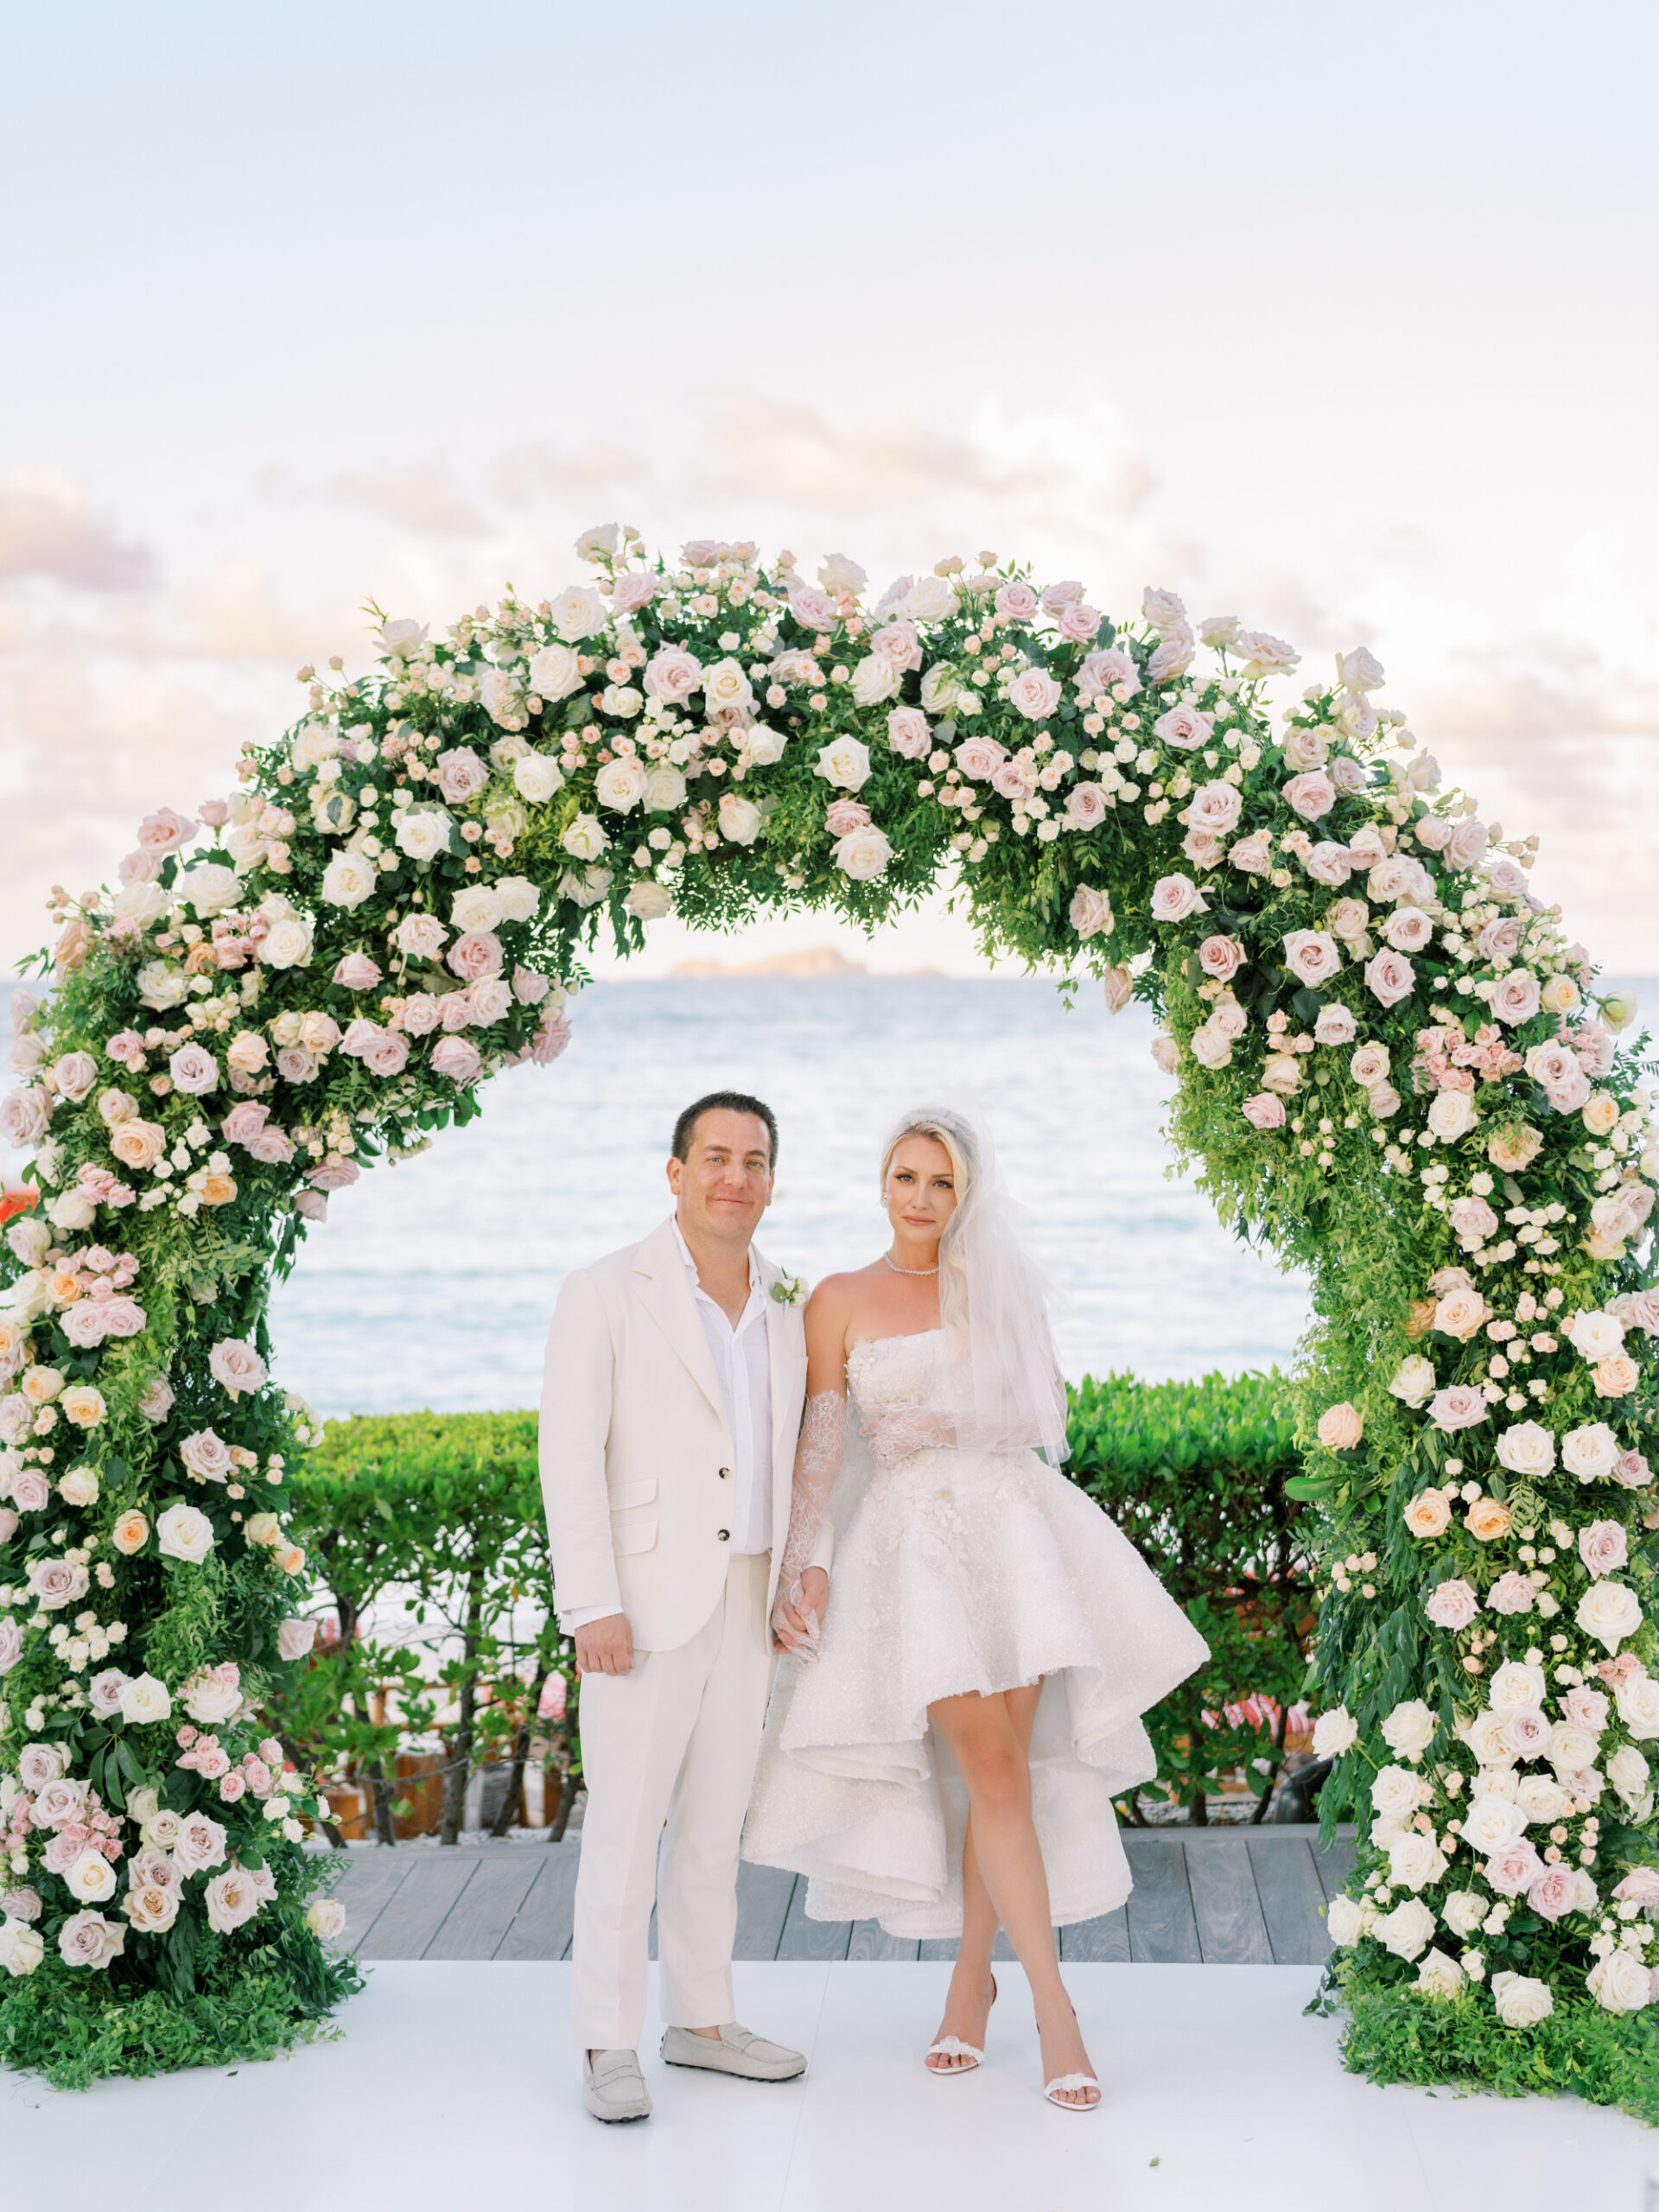 St Barths Wedding Photographer | Eden Rock Saint Barths Luxury Destination Wedding | Molly Carr Photography